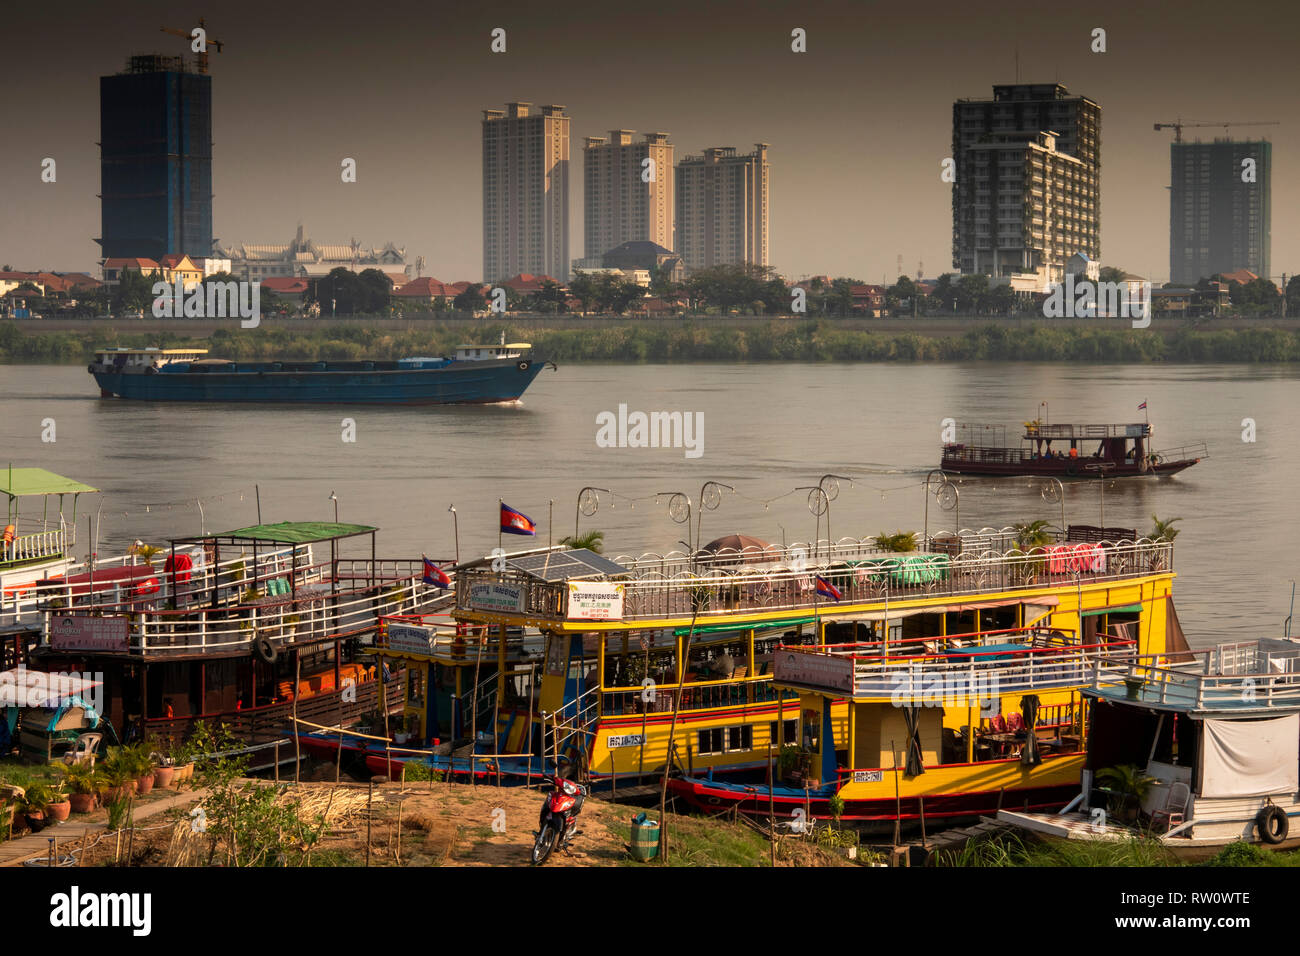 Kambodscha, Phnom Penh, Stadtzentrum, sisowath Quay, River Cruise Boote gefesselt am Flussufer Stockfoto